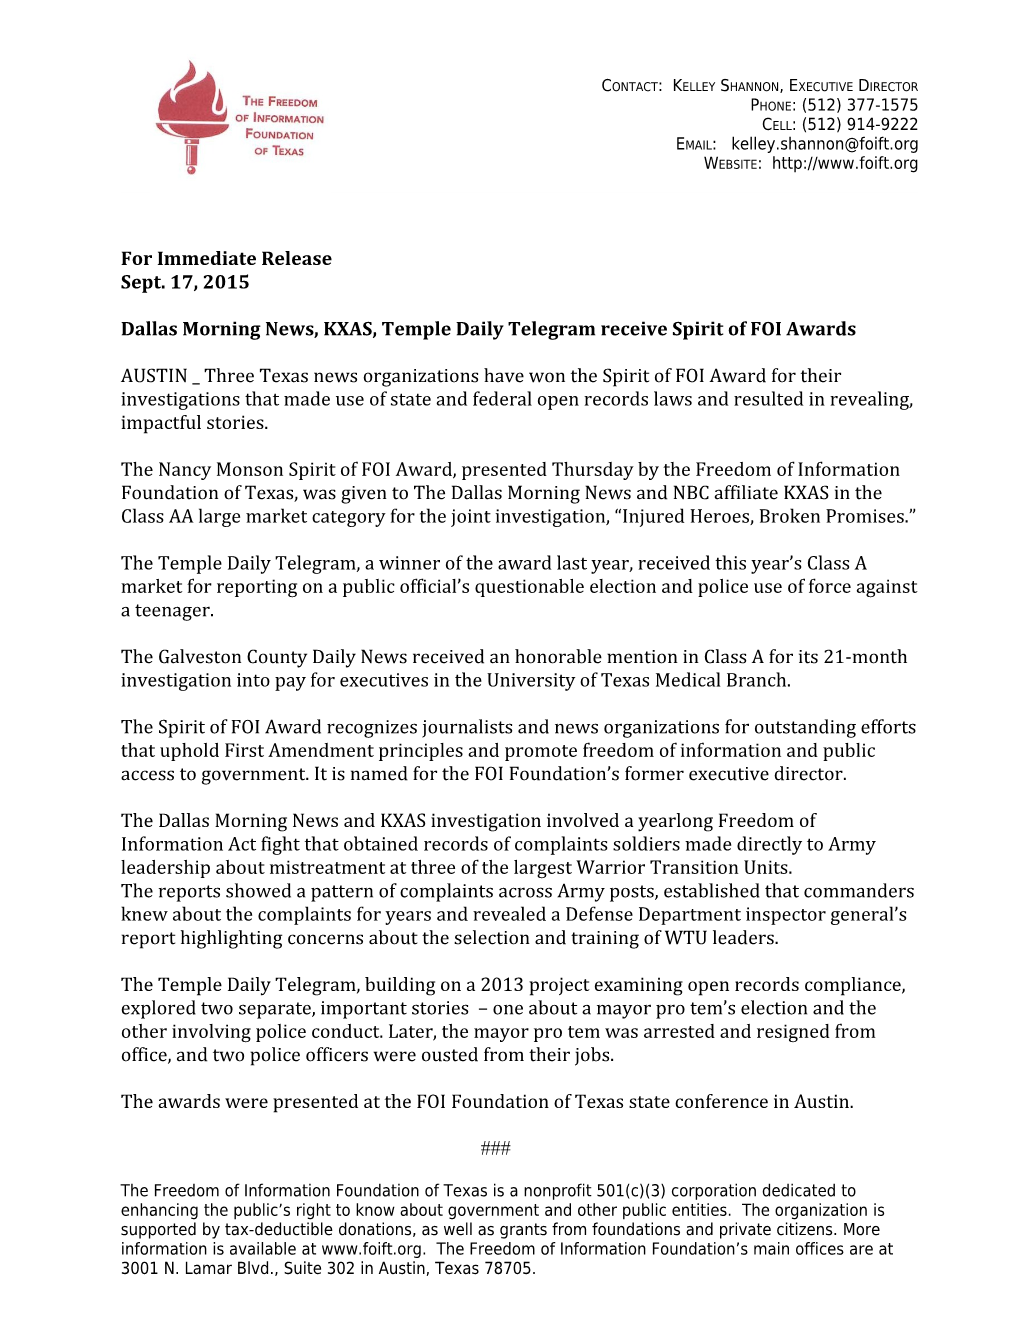 Dallas Morning News, KXAS, Temple Daily Telegram Receive Spirit of FOI Awards